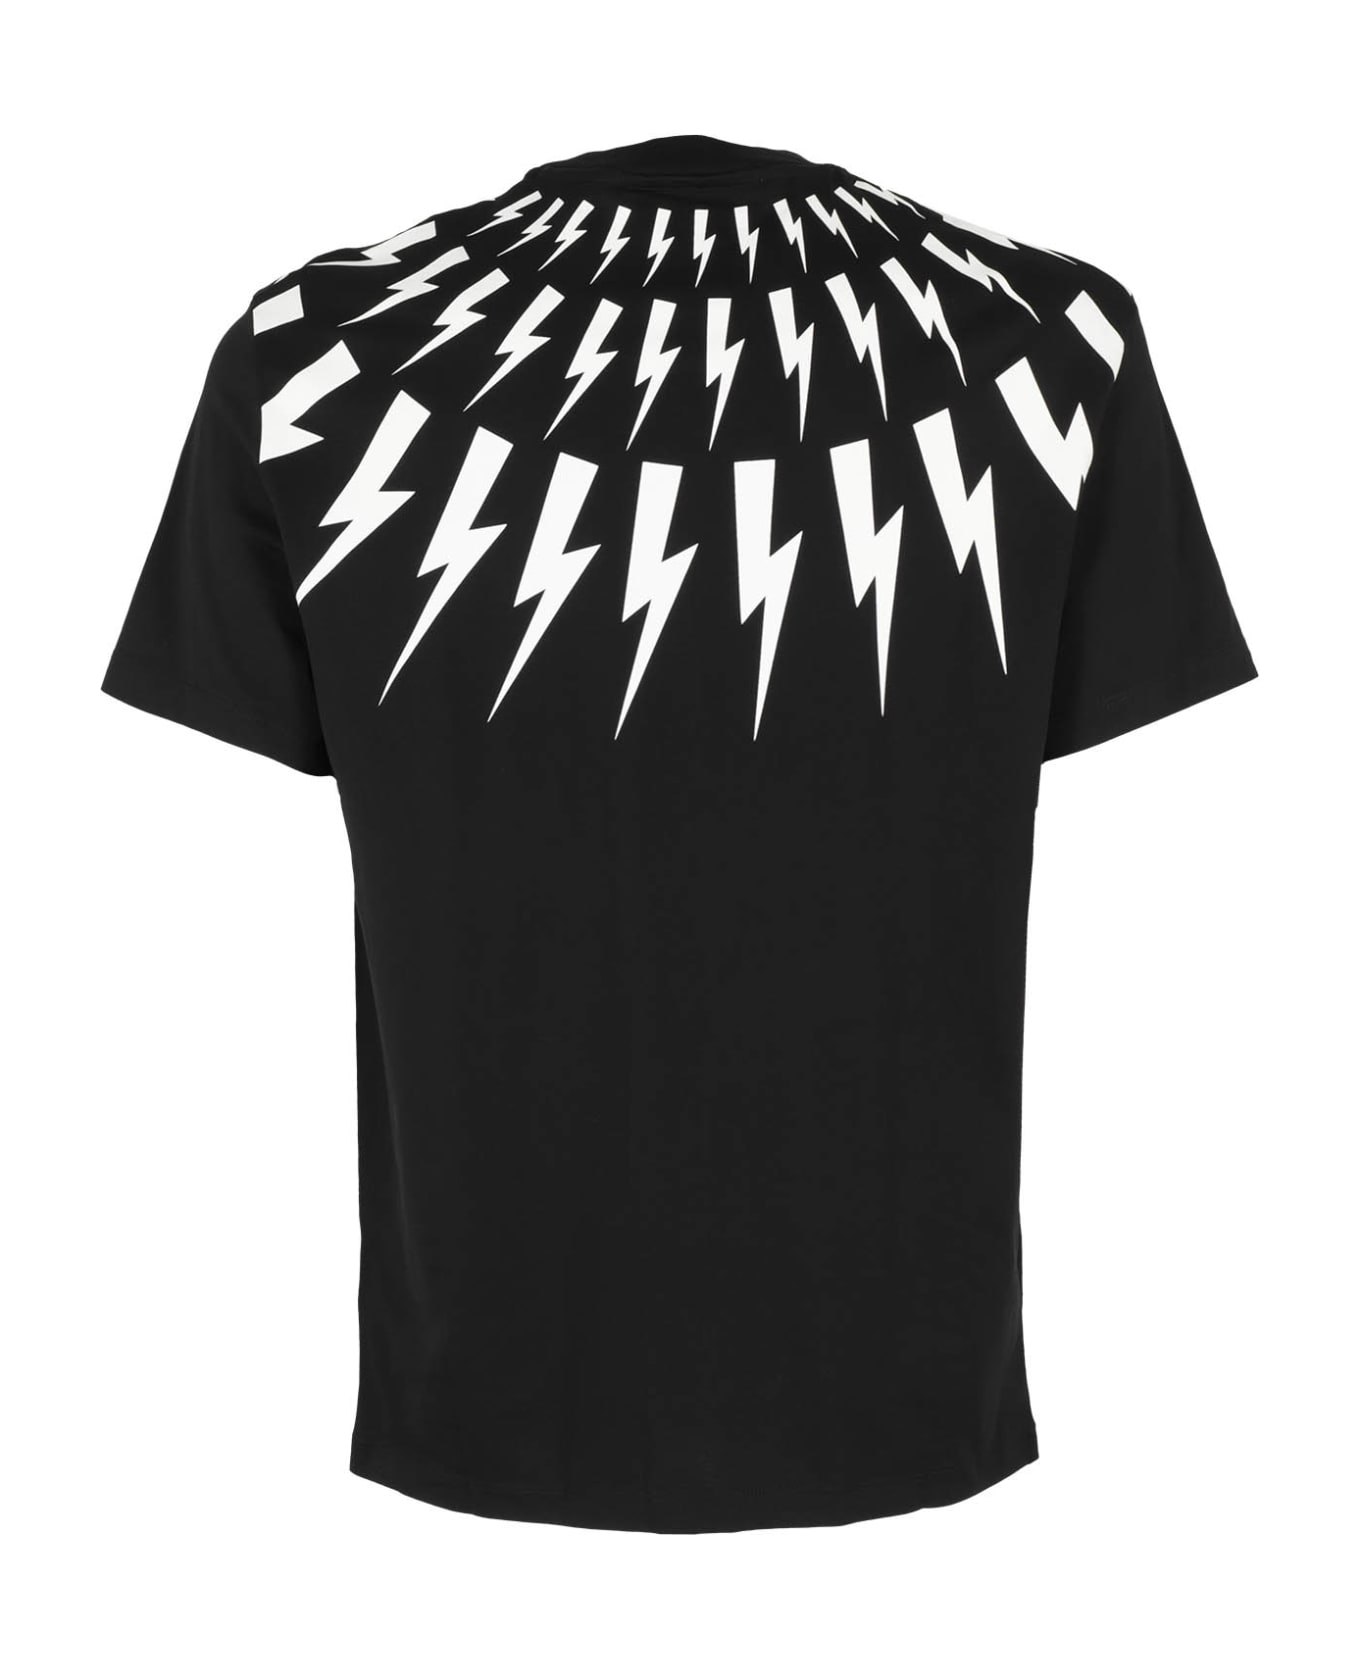 Neil Barrett Fairisle Thunderbolt Slim T-shirt - Black White シャツ